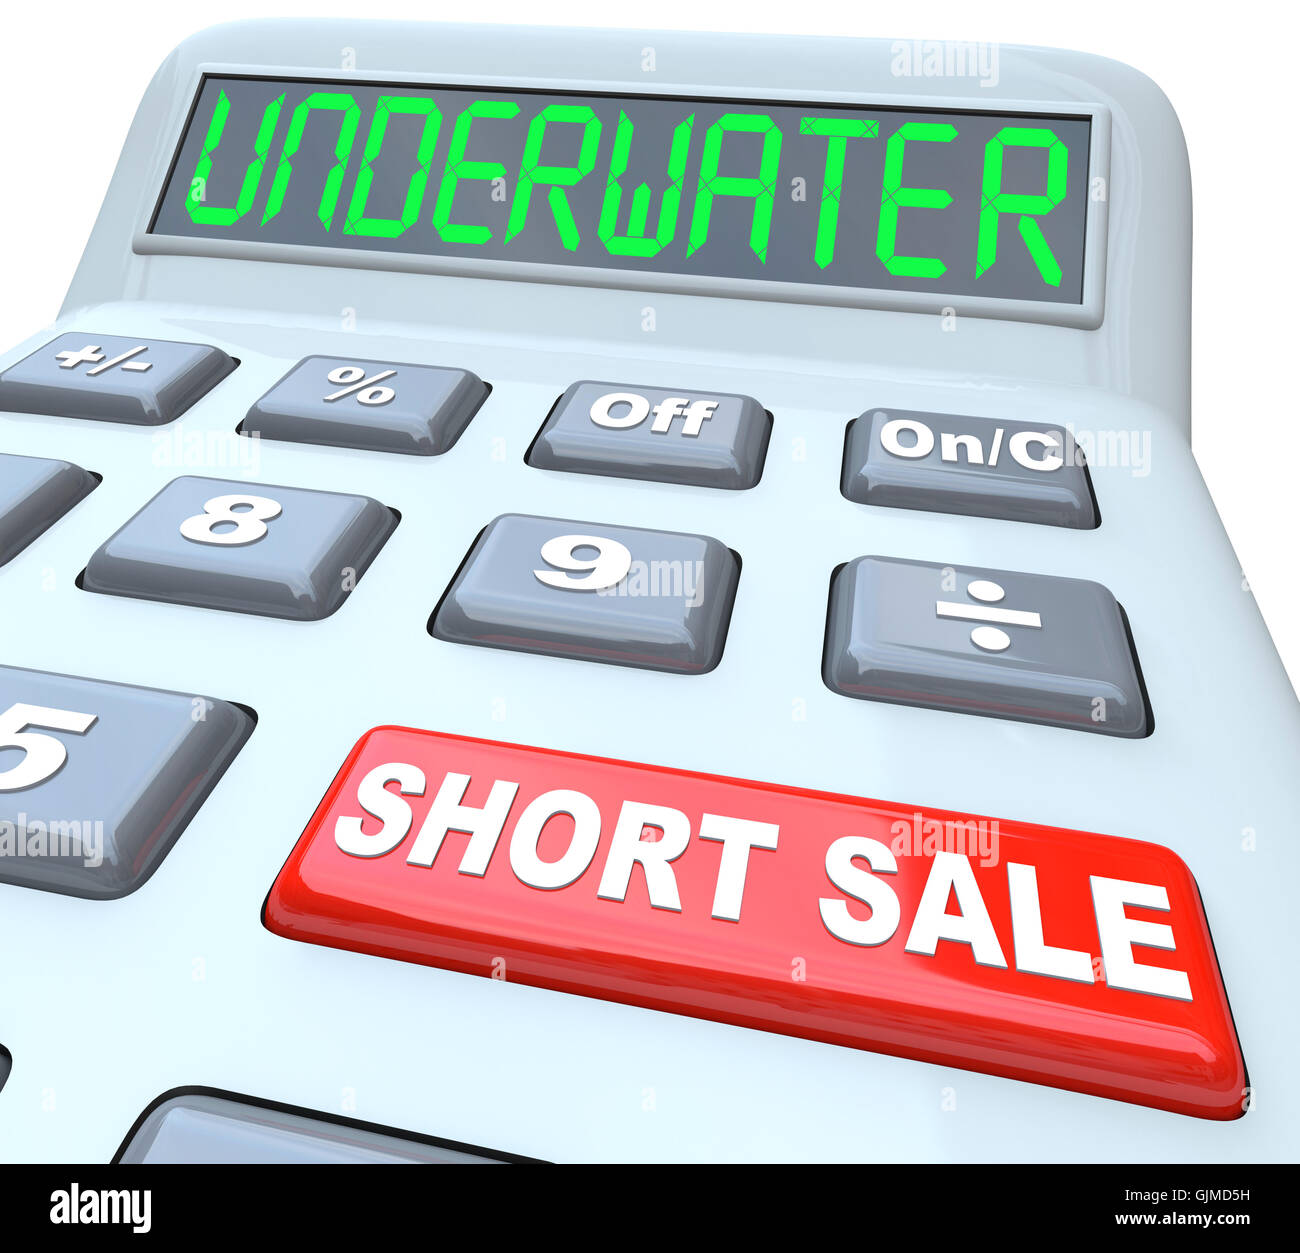 Underwater Short Sale Words on Calculator Stock Photo